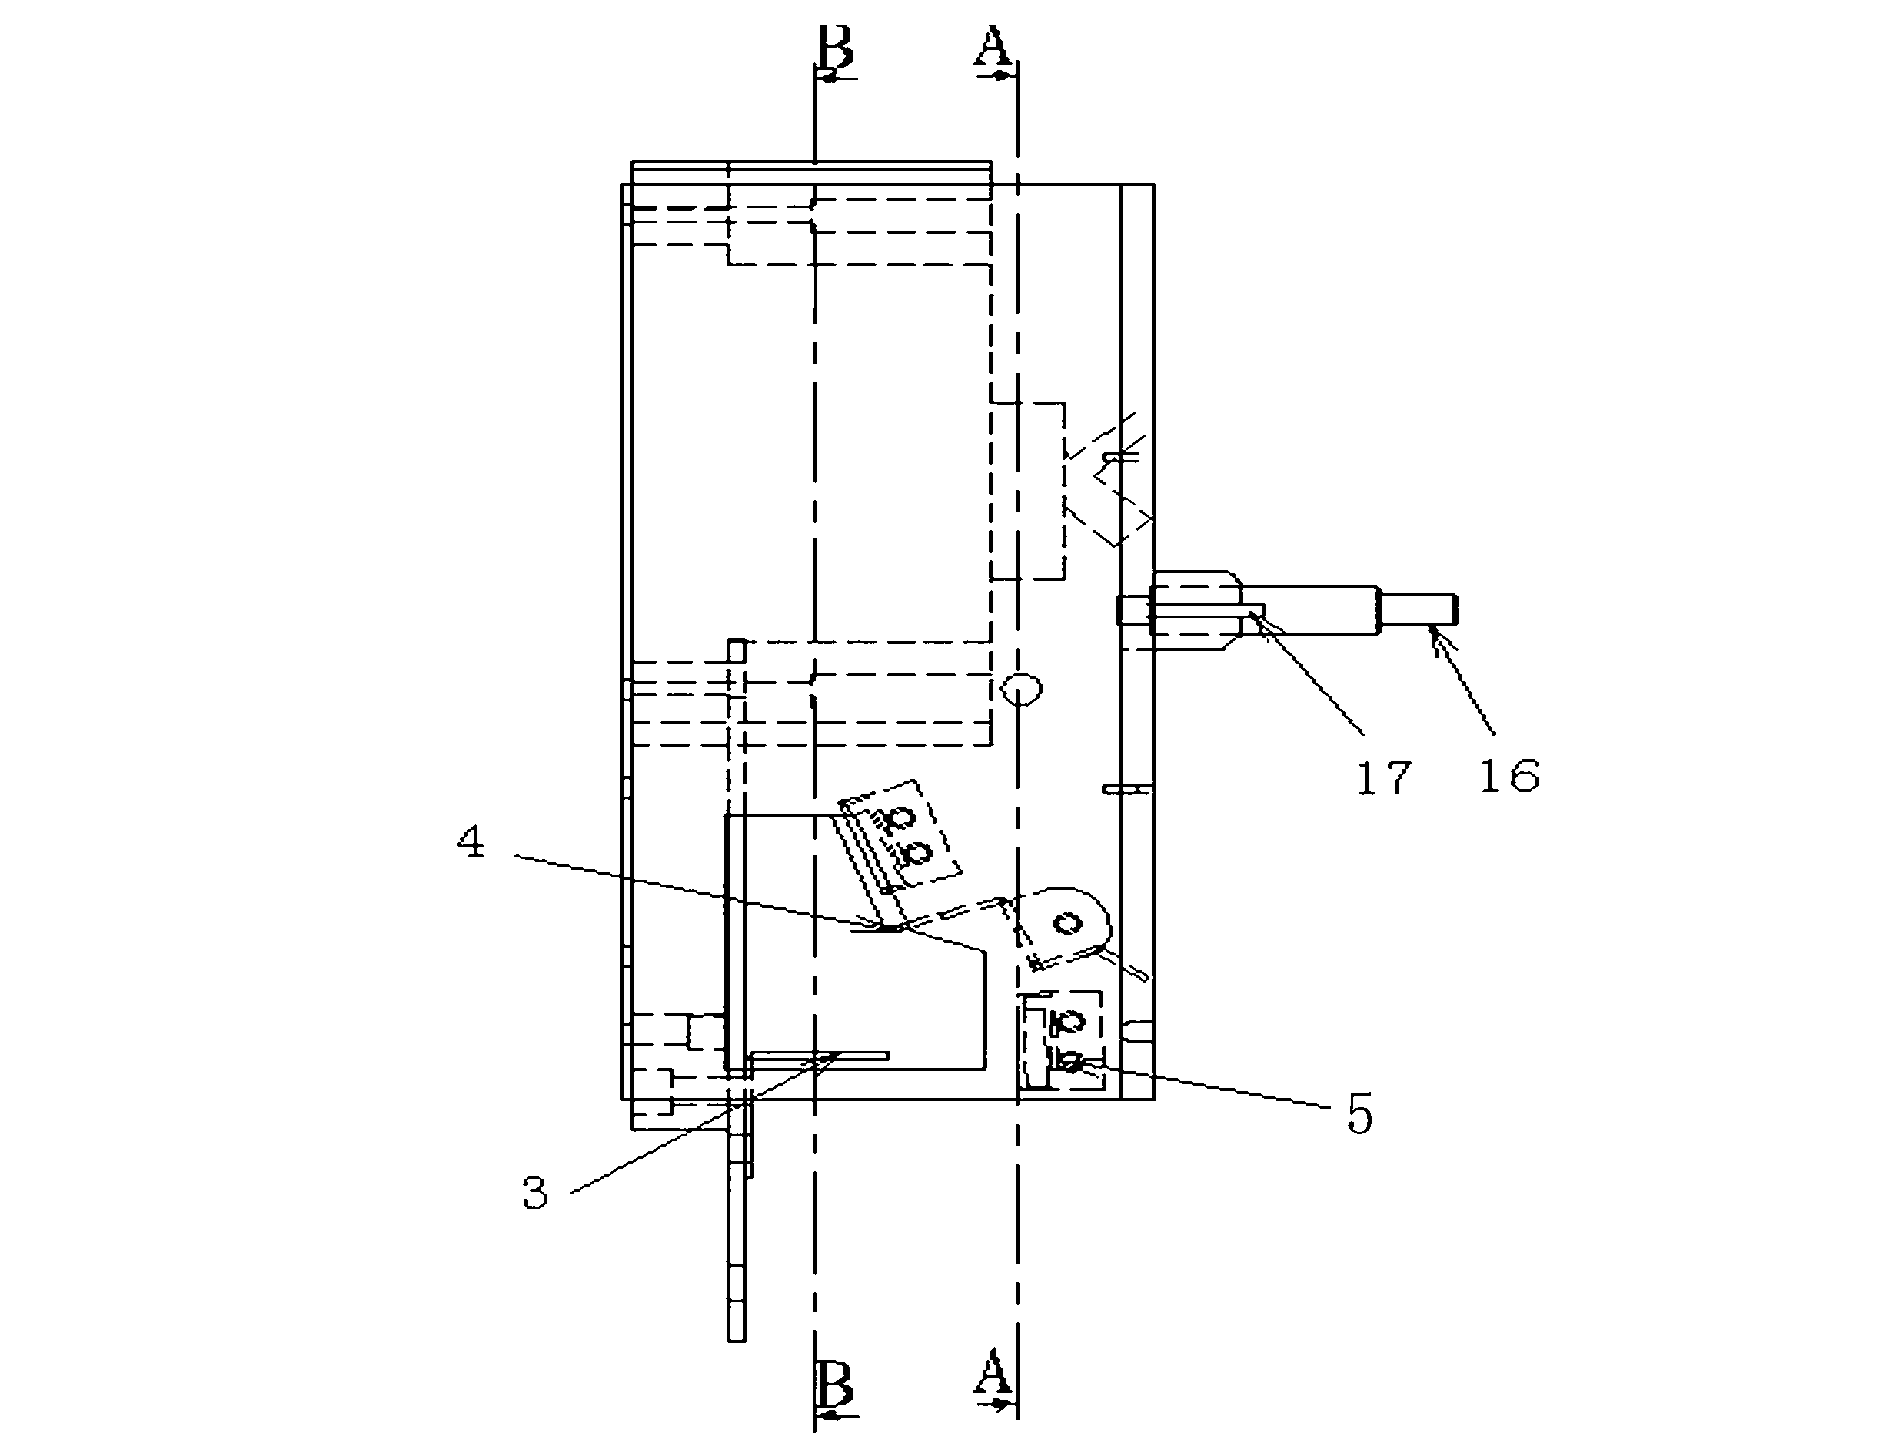 Grounding interlocking mechanism for low voltage plastic casing switch